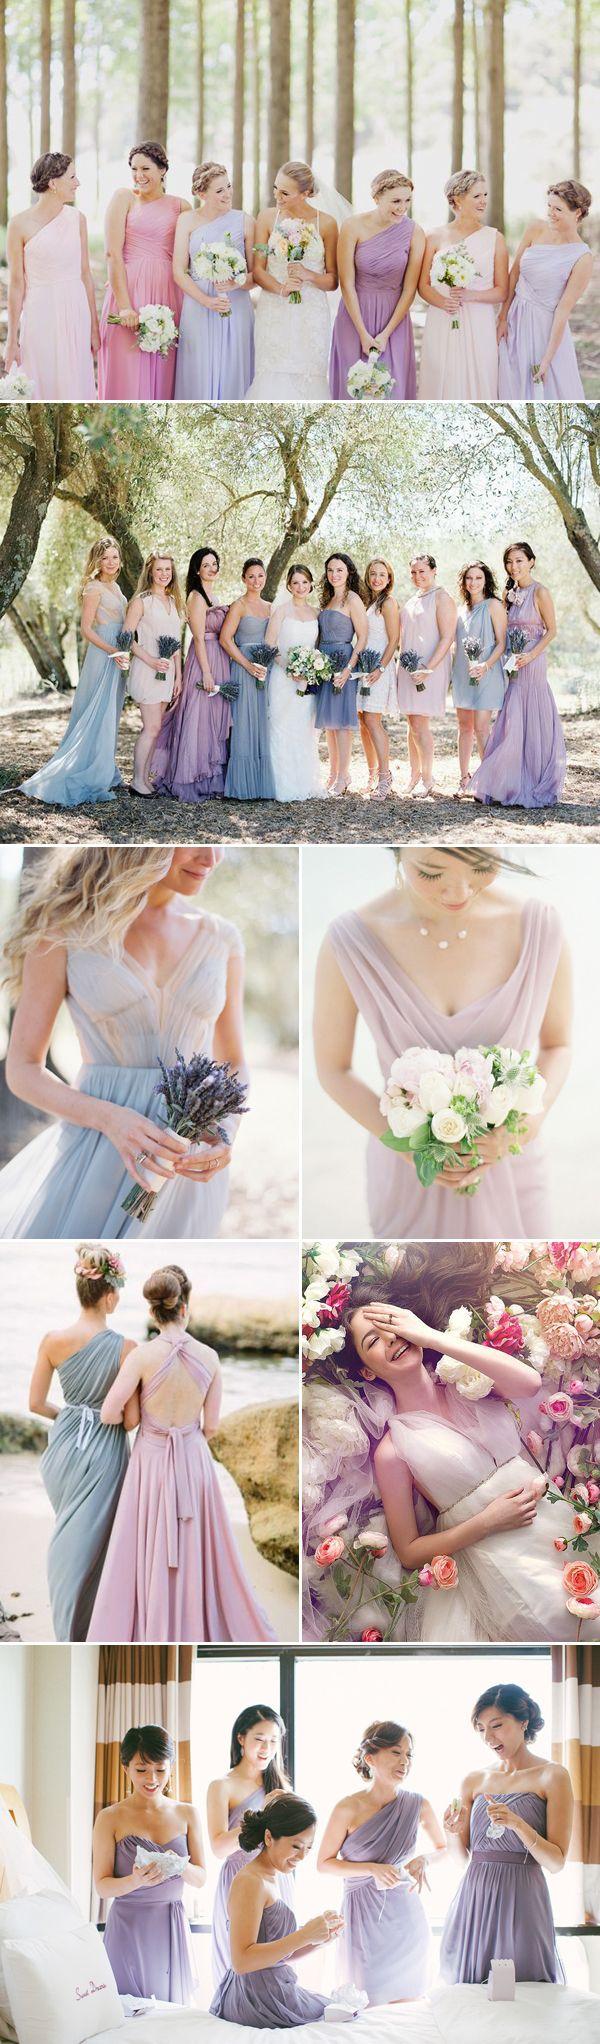 Hochzeit - Top 8 Bridesmaid Dress Trends For Summer 2014